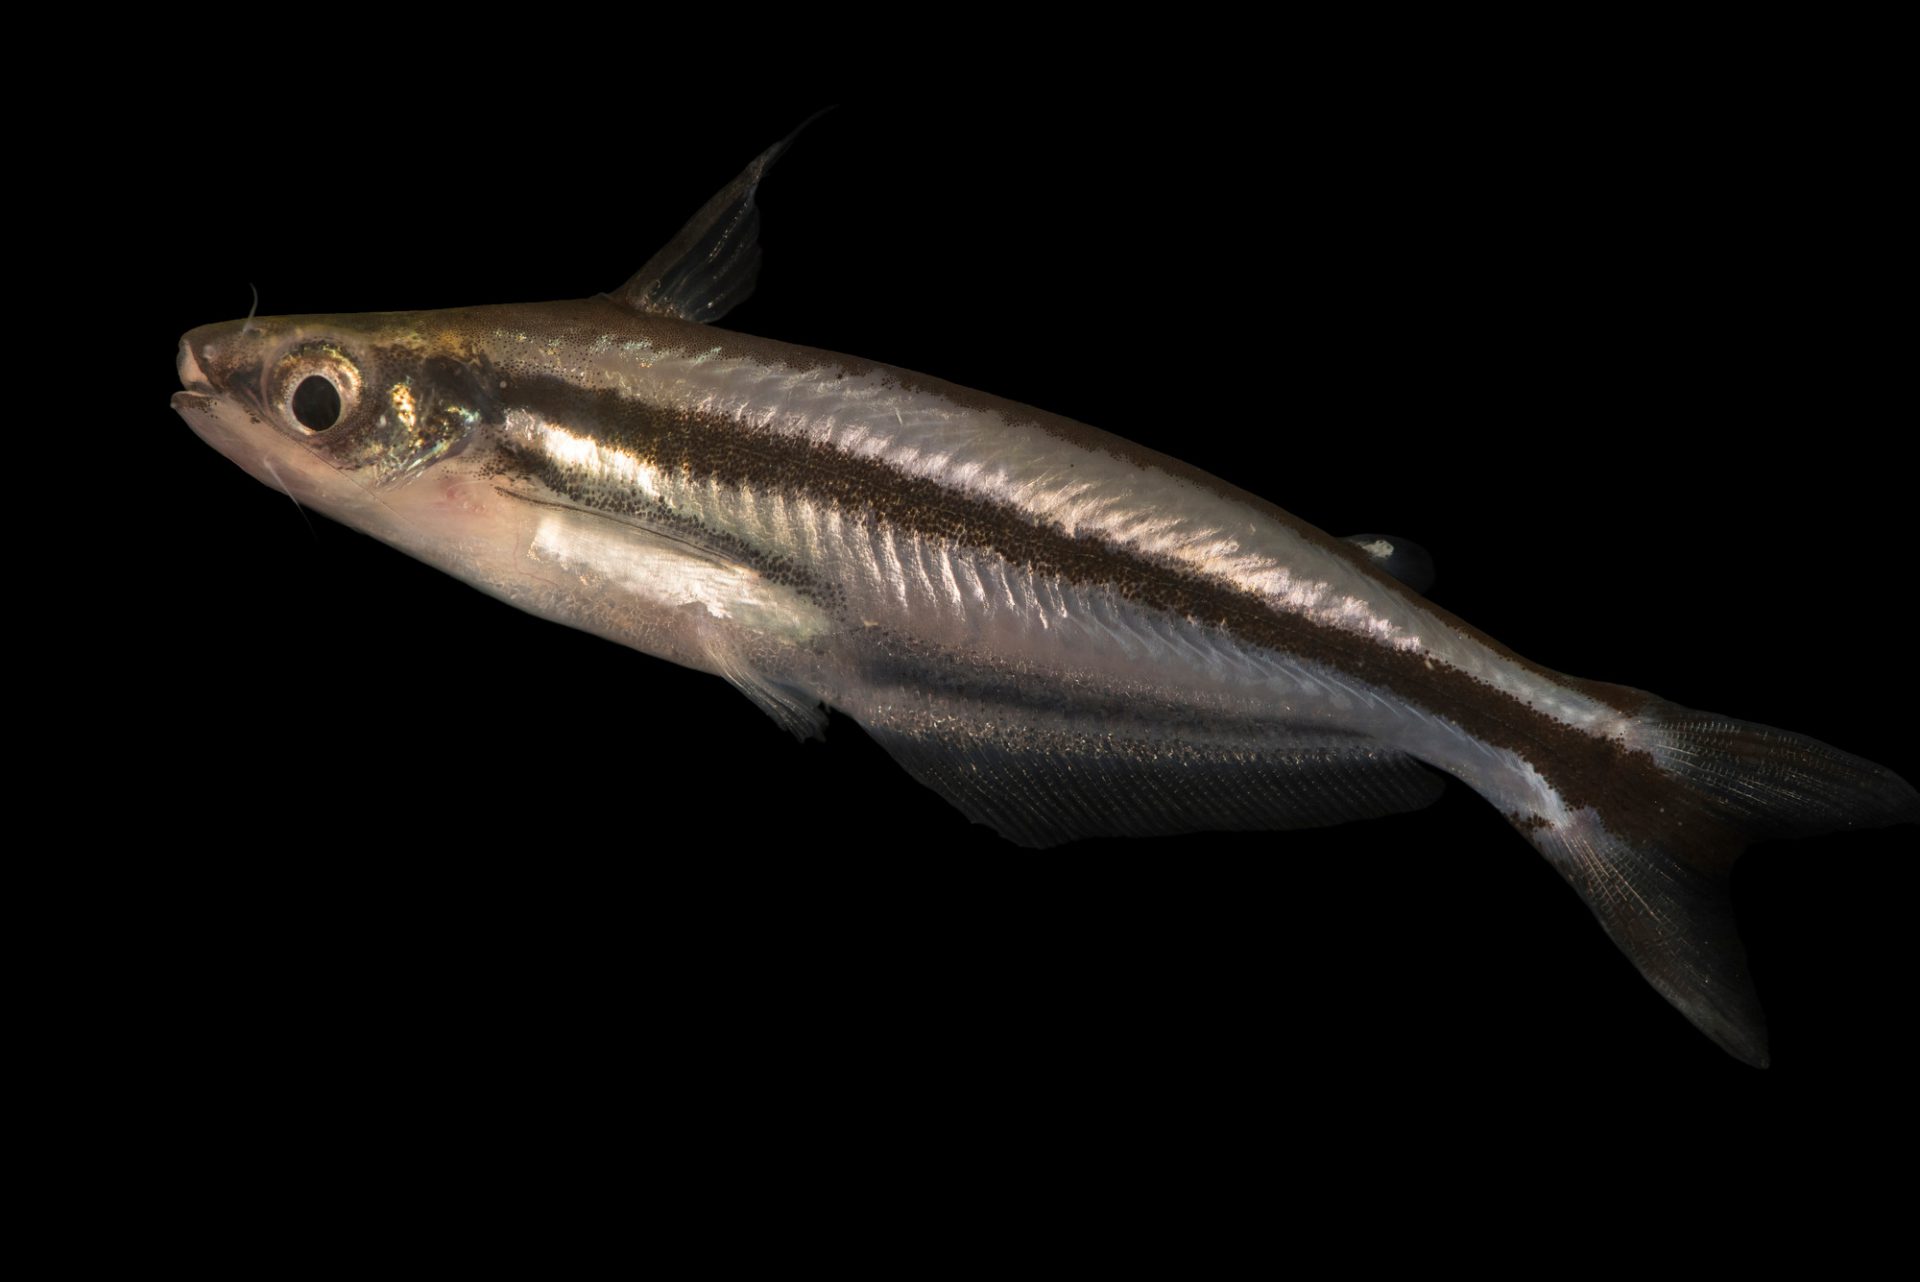 A Pareutropius debauwi fish species